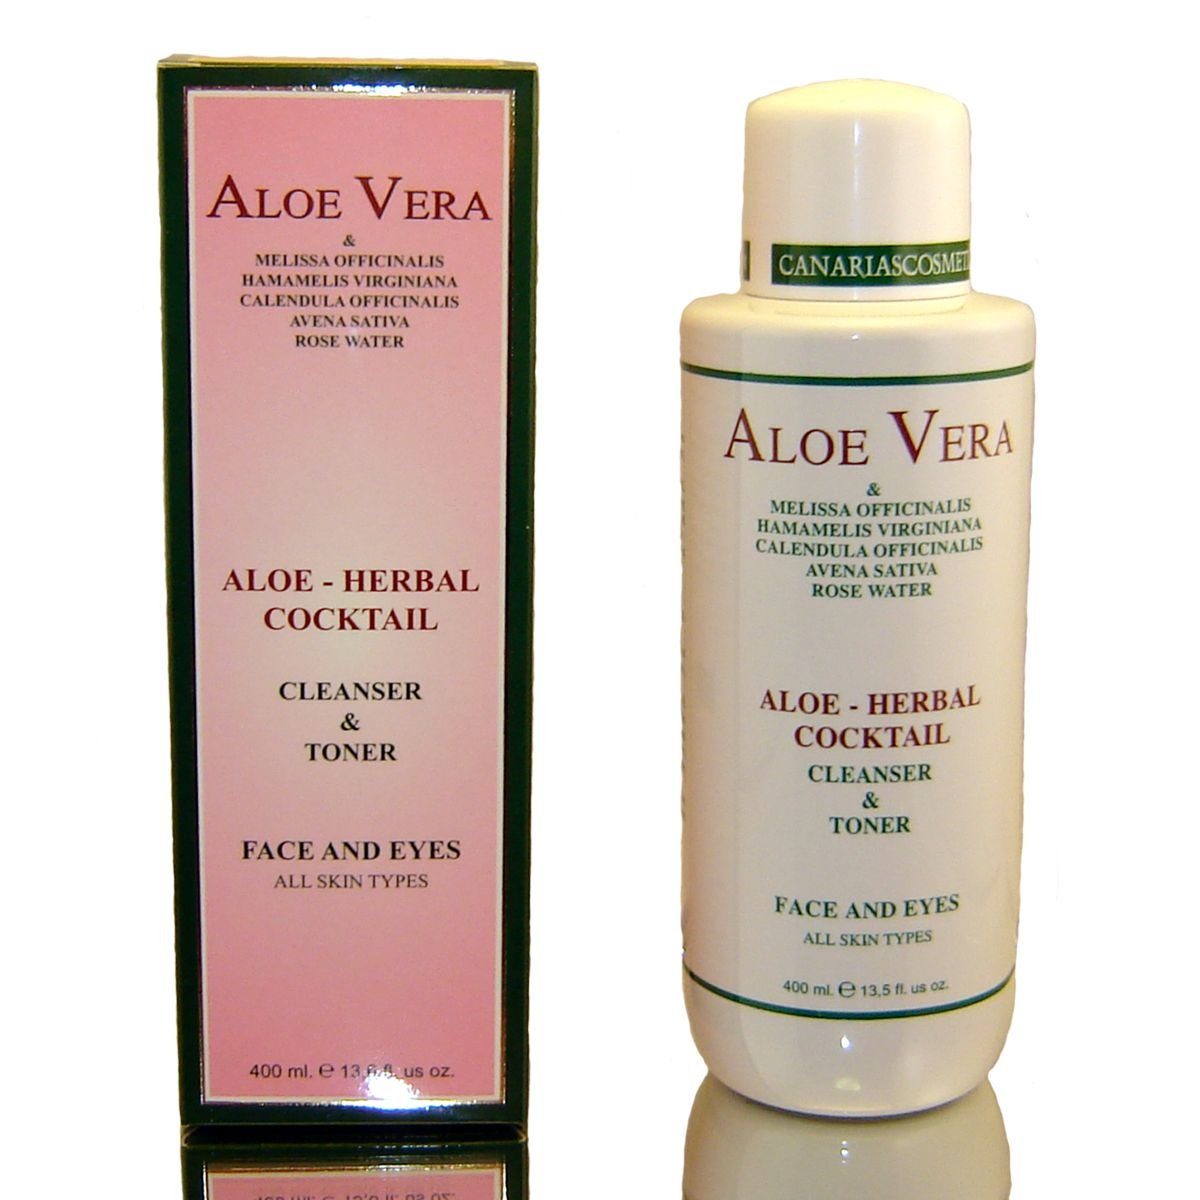 & - ml) Cleanser (400 canarias cosmetics Cocktail Aloe Toner Herbal Gesichtsreinigungsgel CC